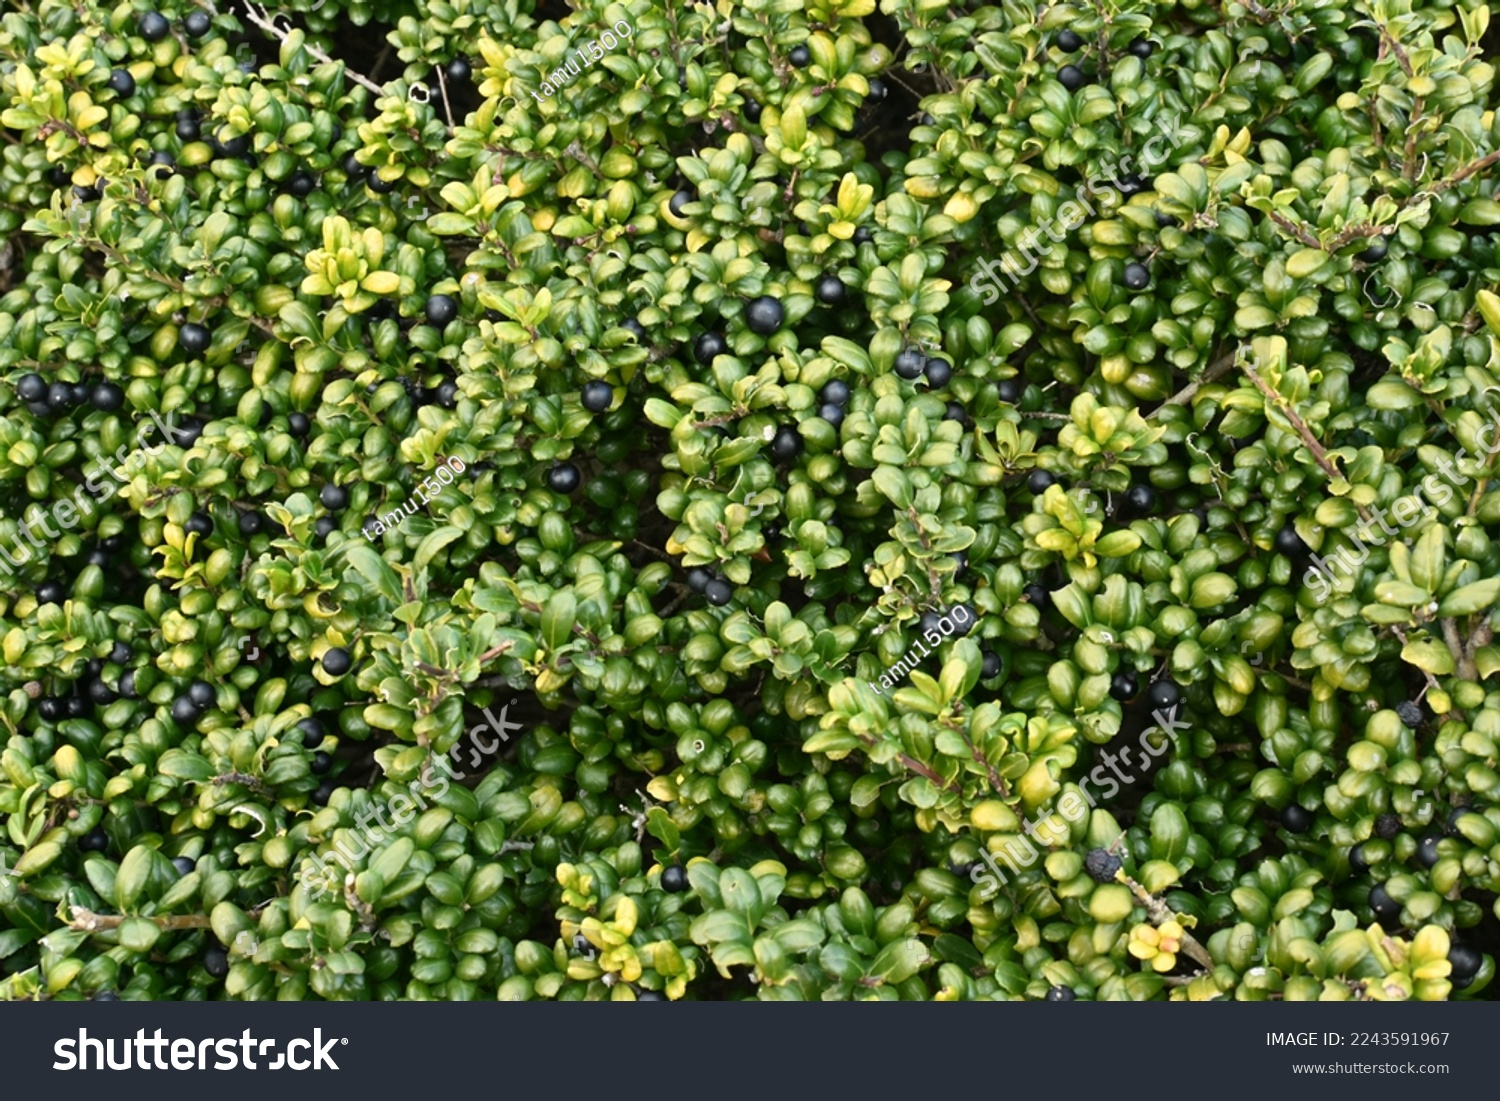 Irex crenata  Convexa  ( Mametsuge holly ) tree leaves and berries.
Aquifoliaceae evergreen shrub. #2243591967